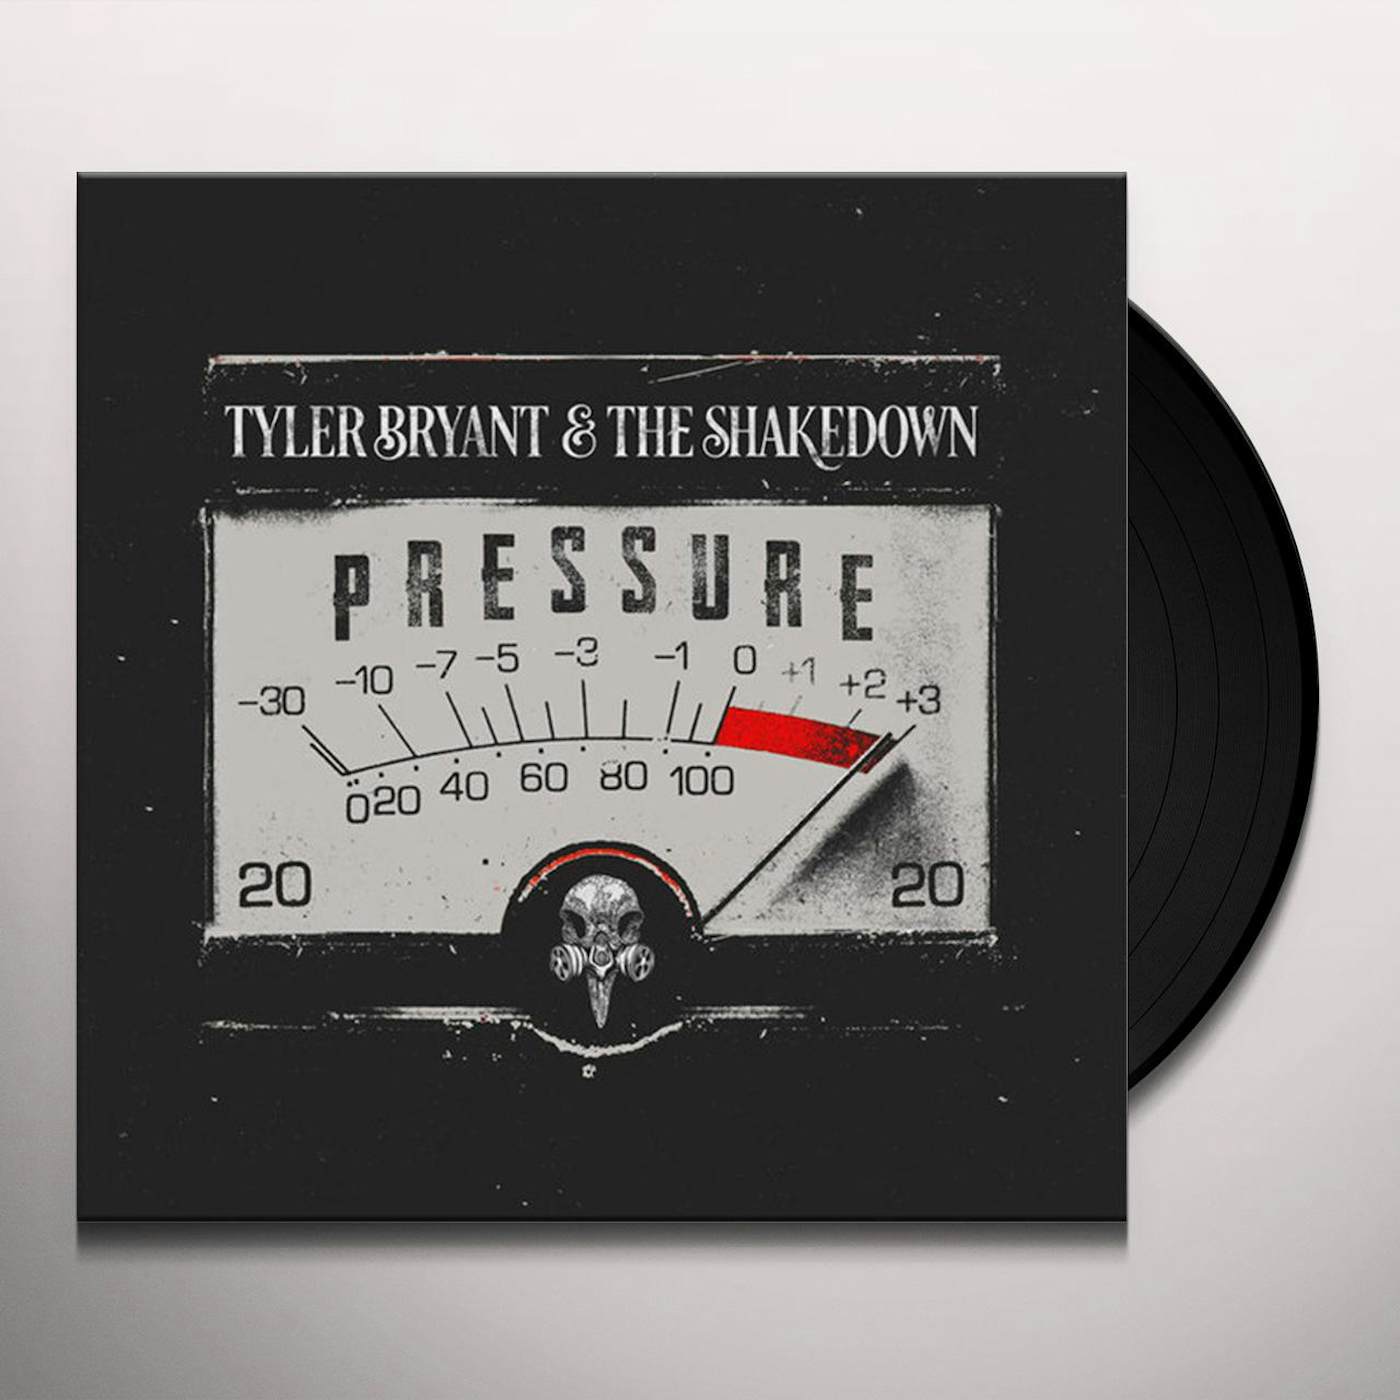 Tyler Bryant & the Shakedown Pressure Vinyl Record